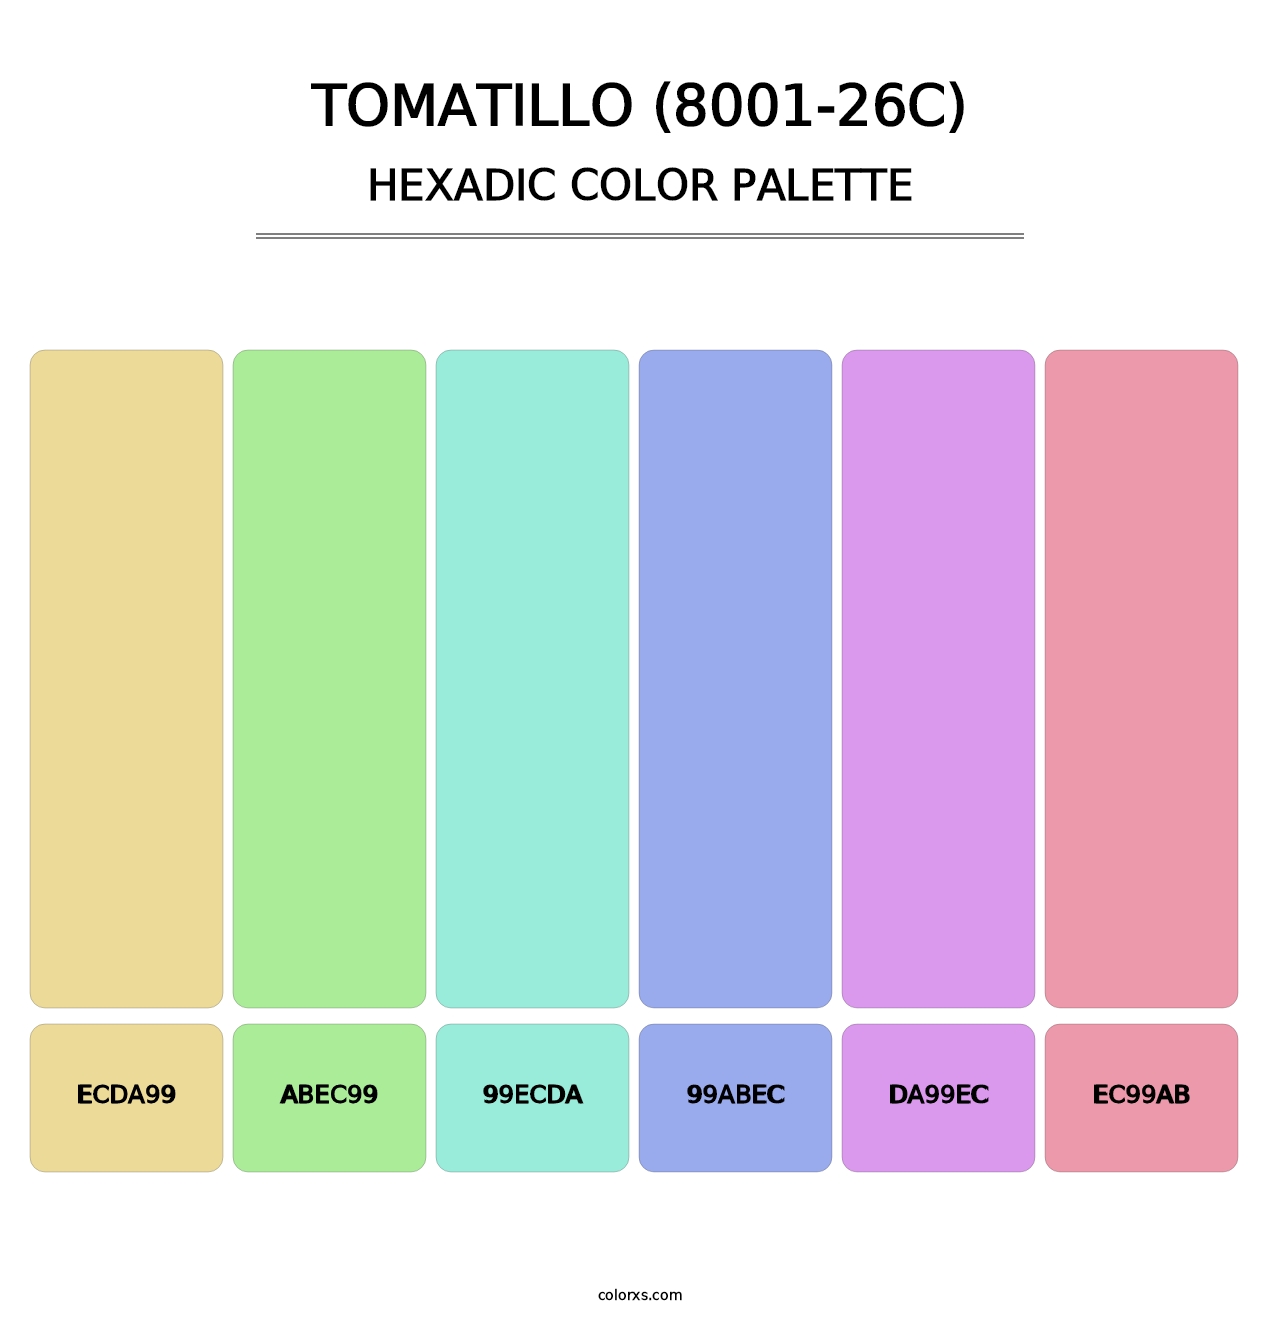 Tomatillo (8001-26C) - Hexadic Color Palette